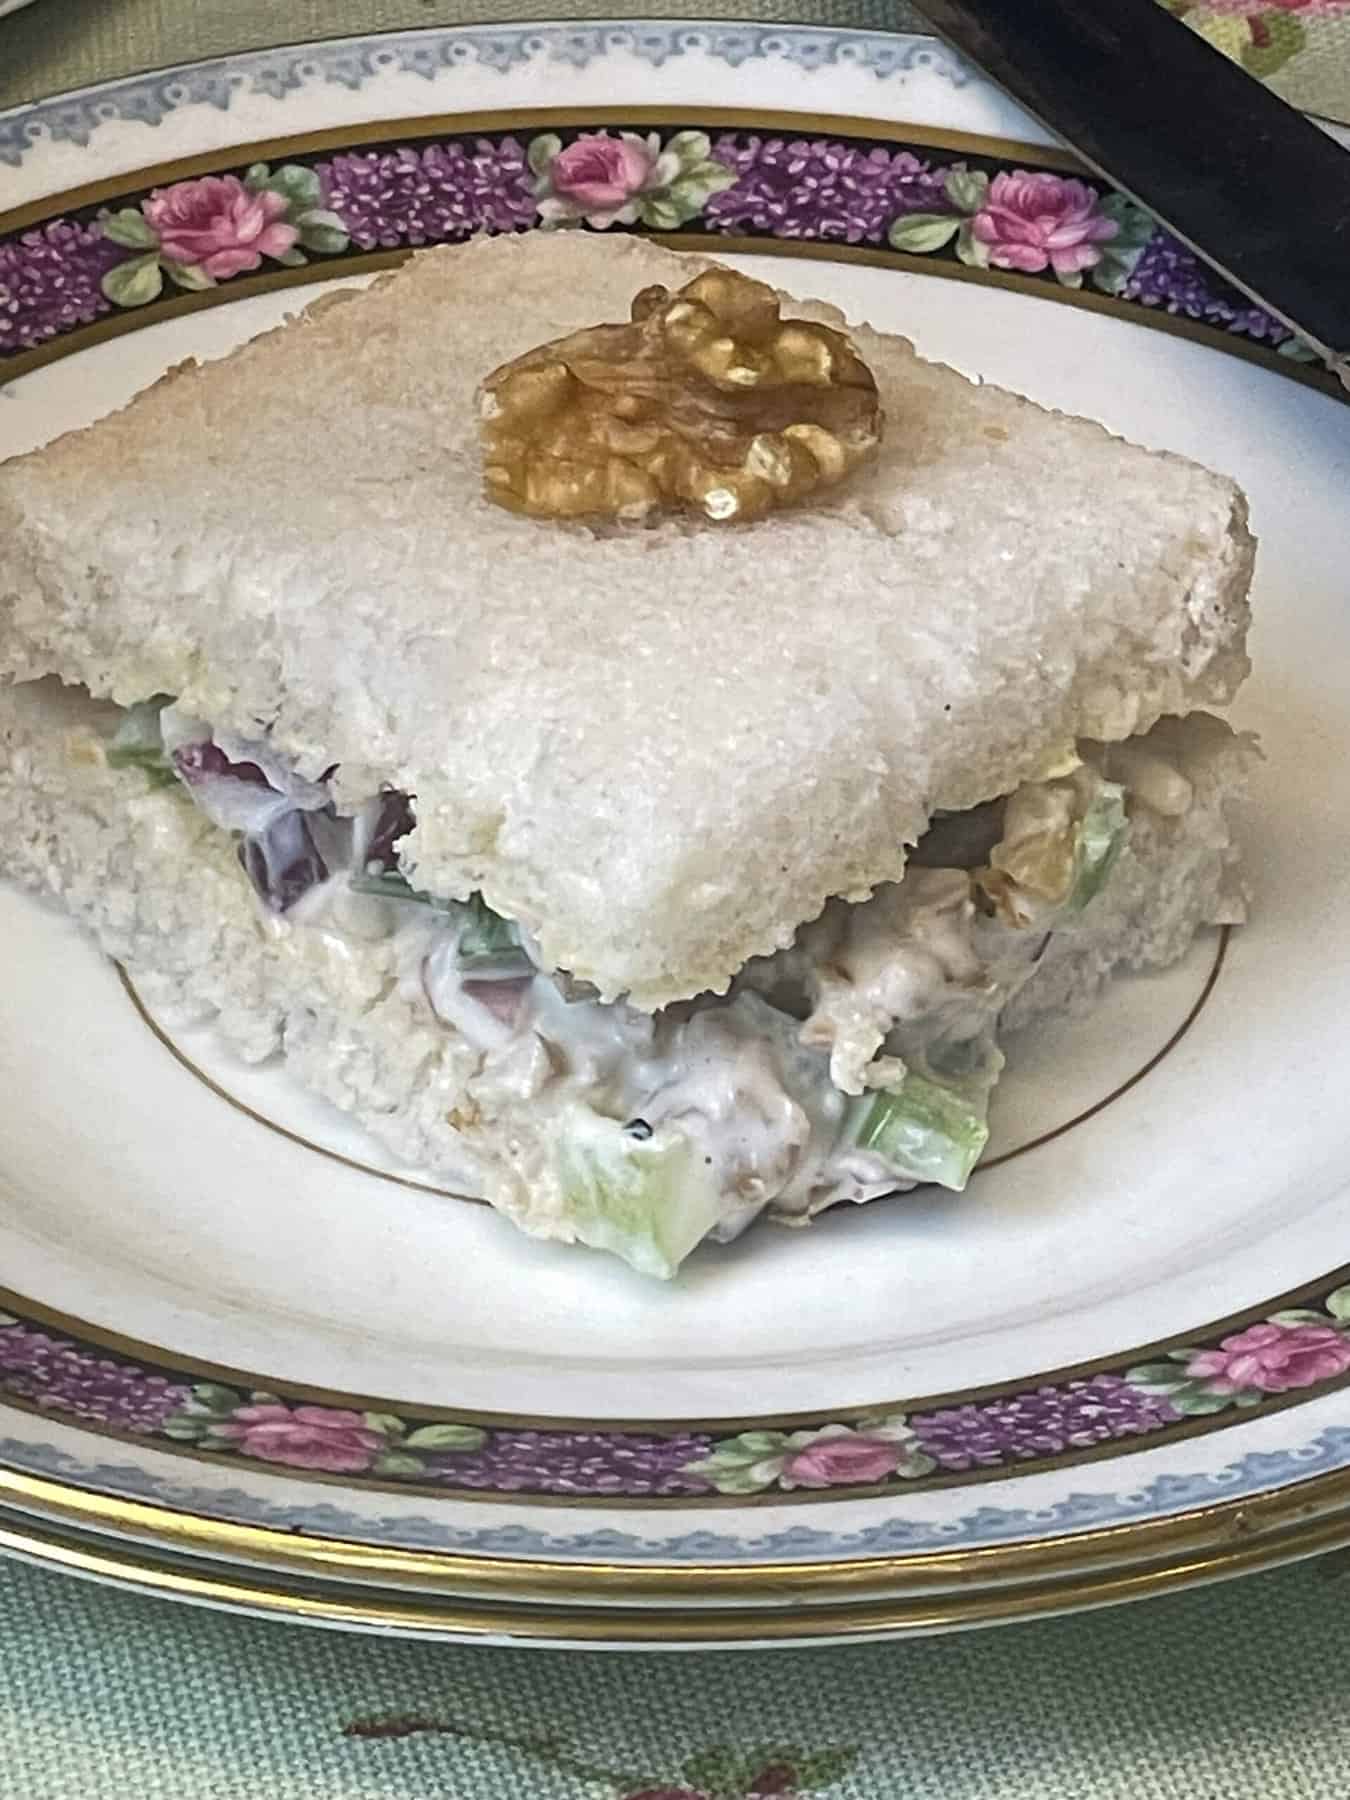 A dainty small sandwich on purple patterned rimmed vintage plate.